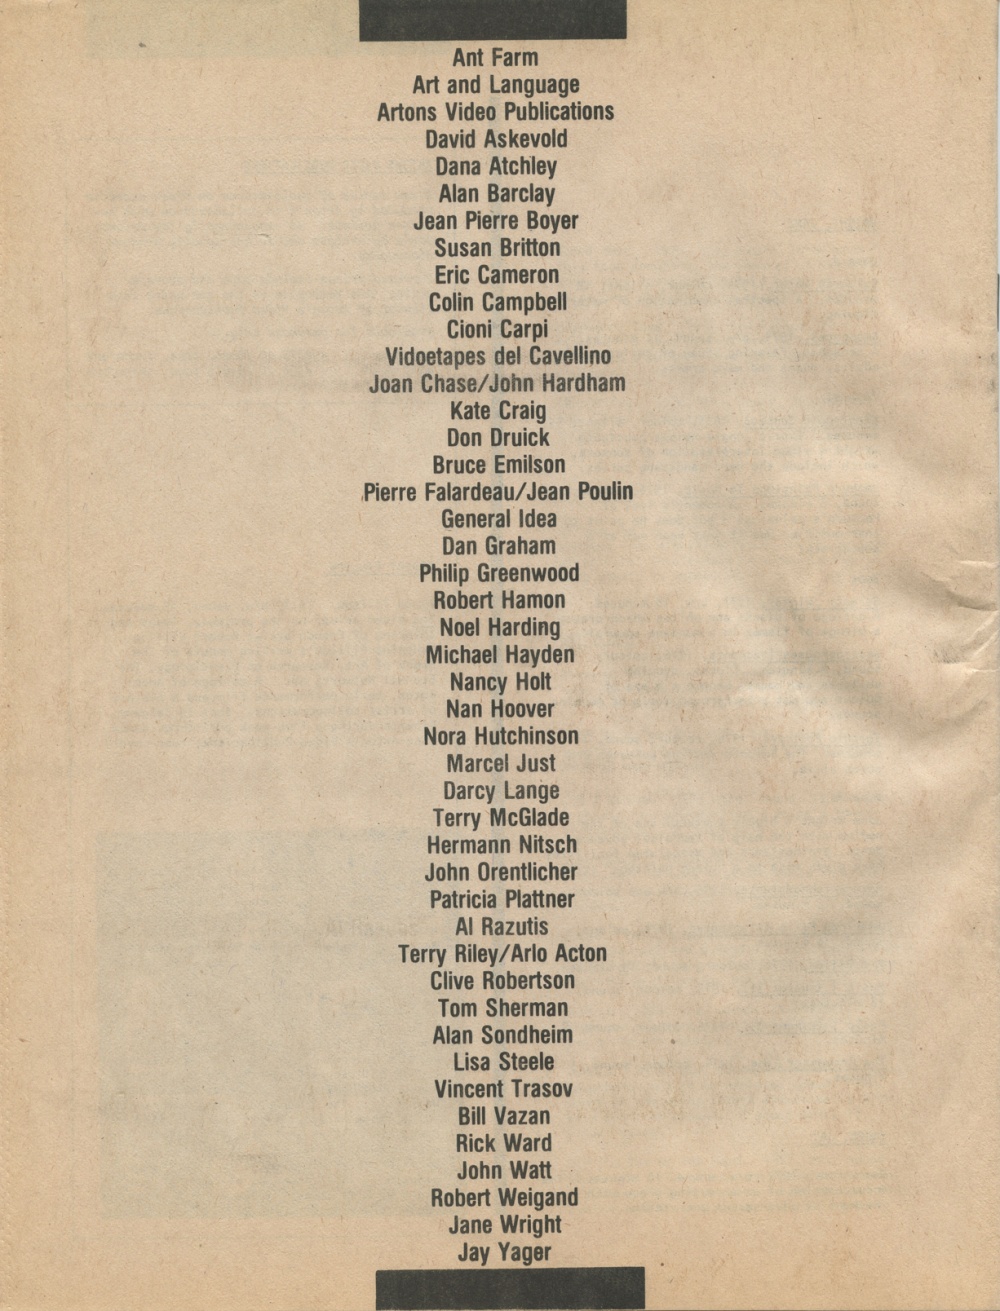 Video Catalogue. Autumn 1979.